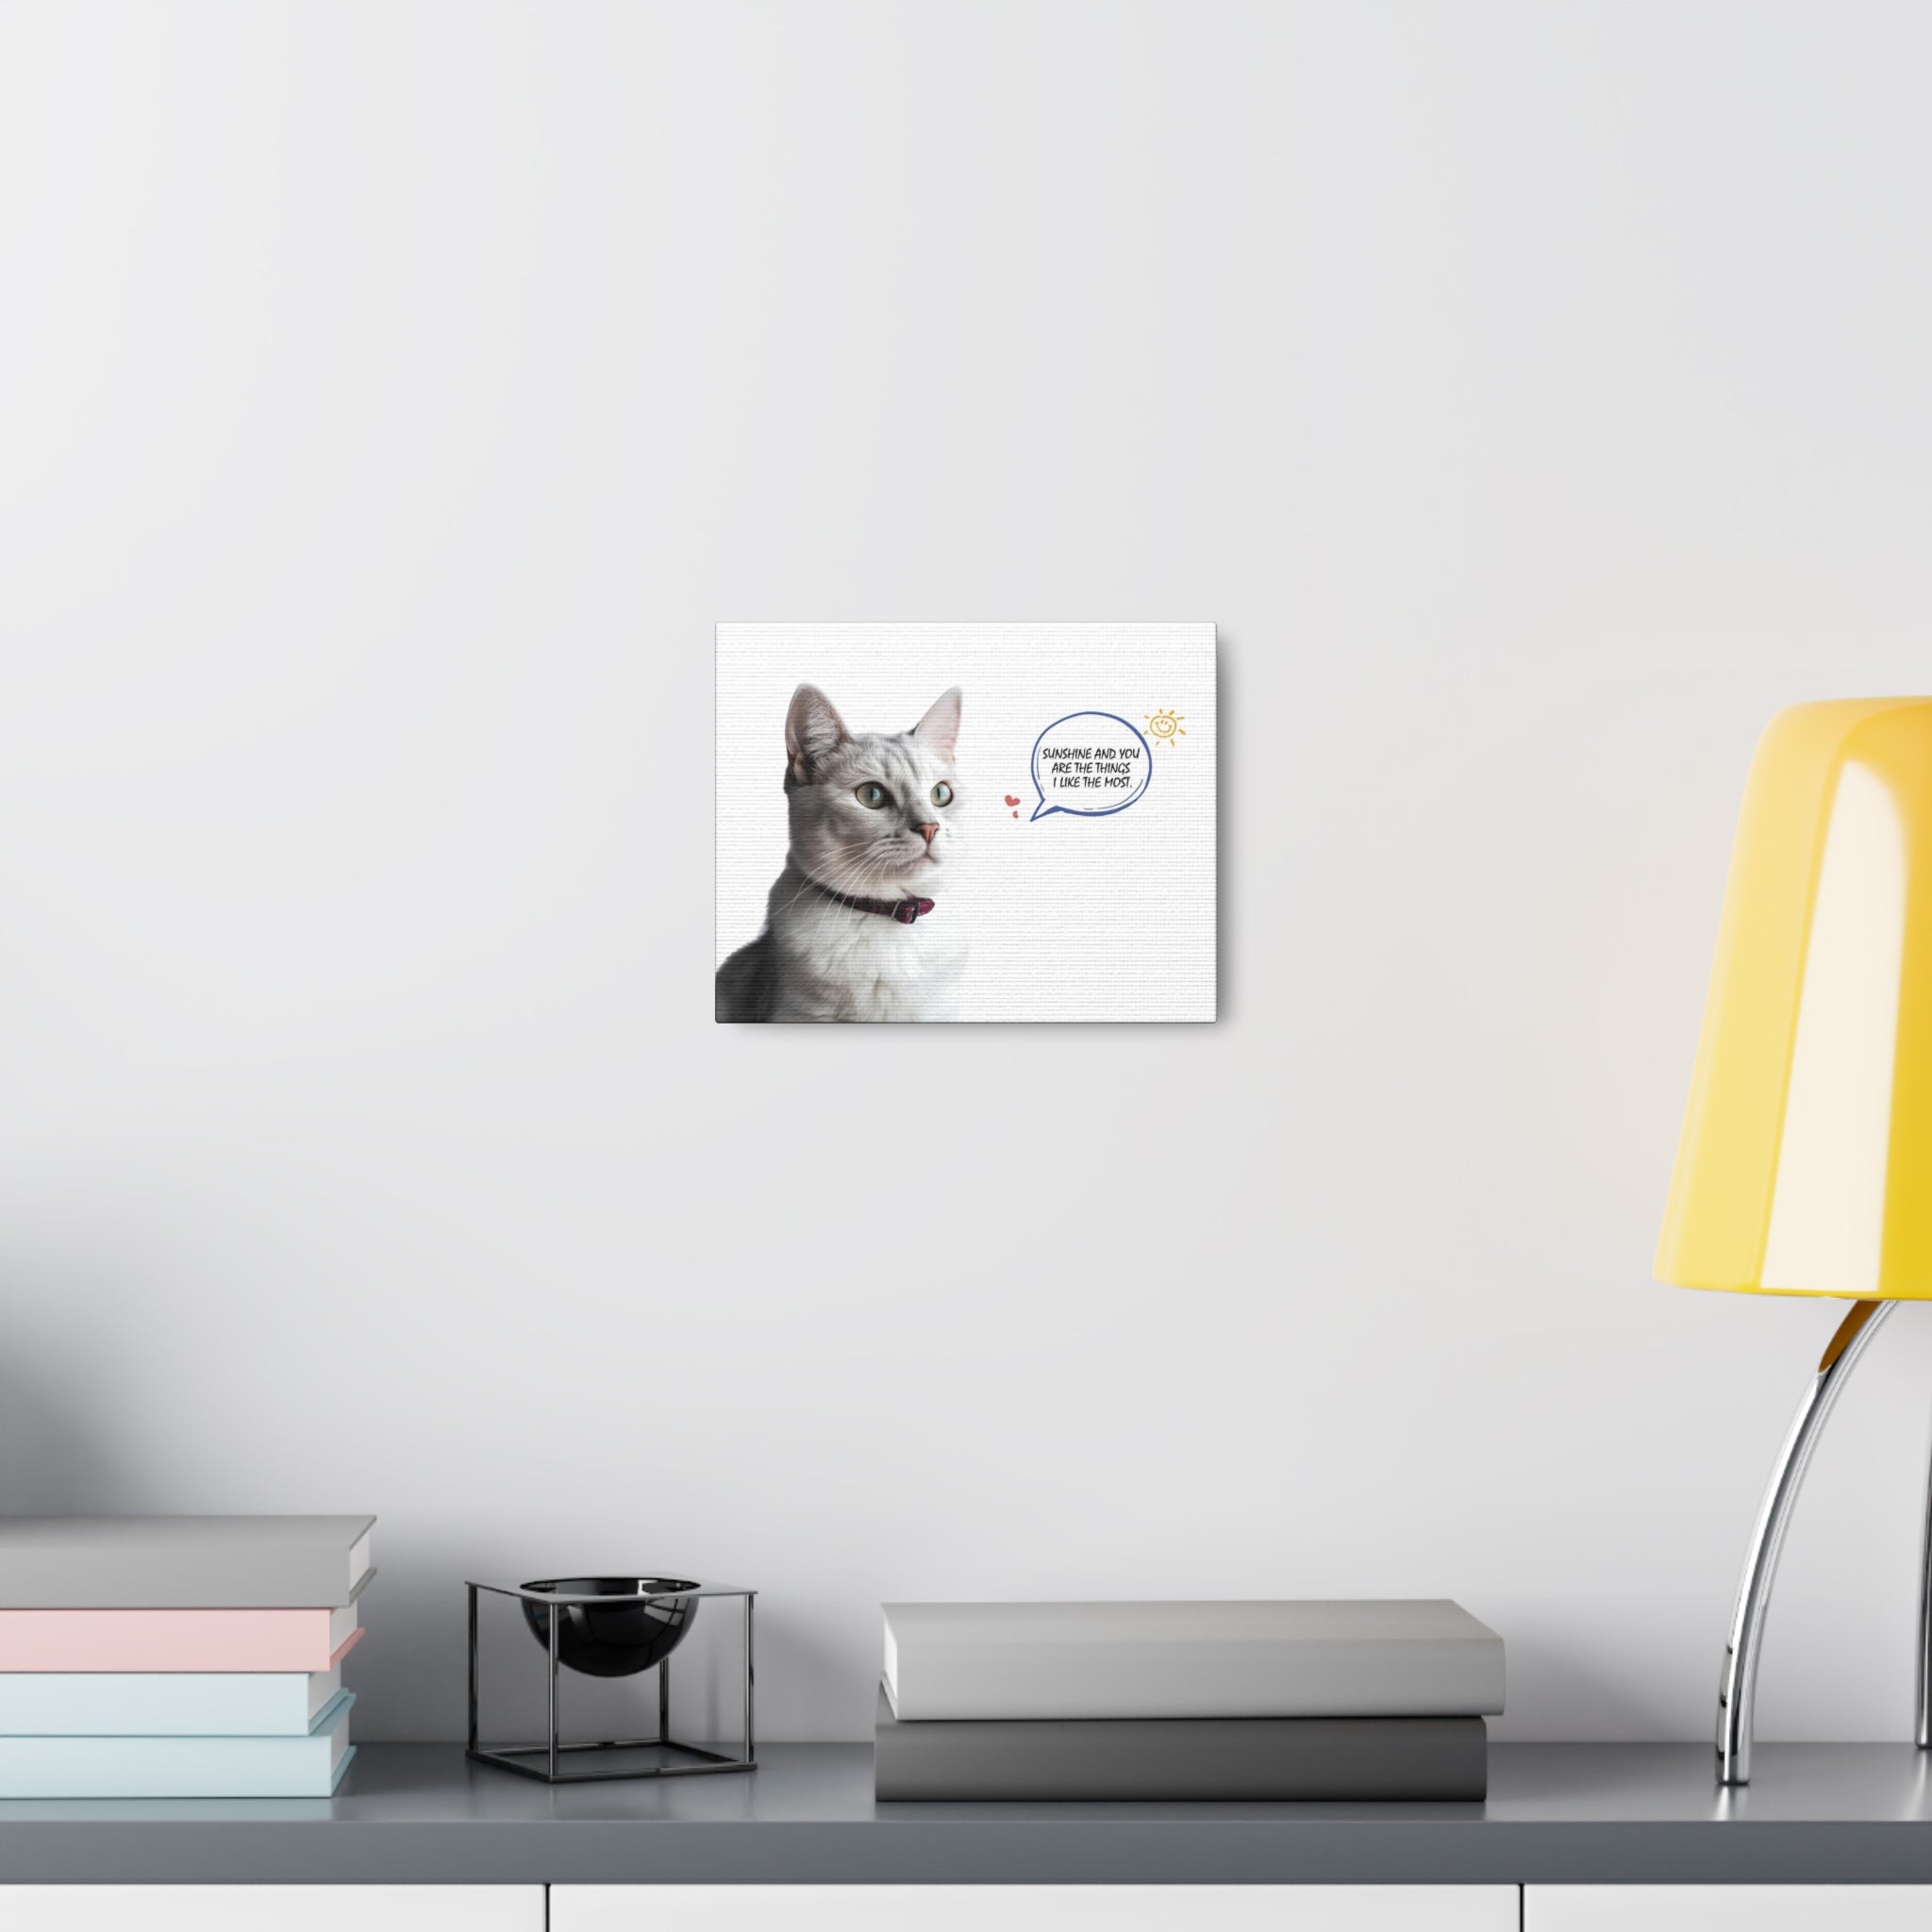 Cat with Sunshine - Personalized Pet Portrait Gifts Canvas Prints